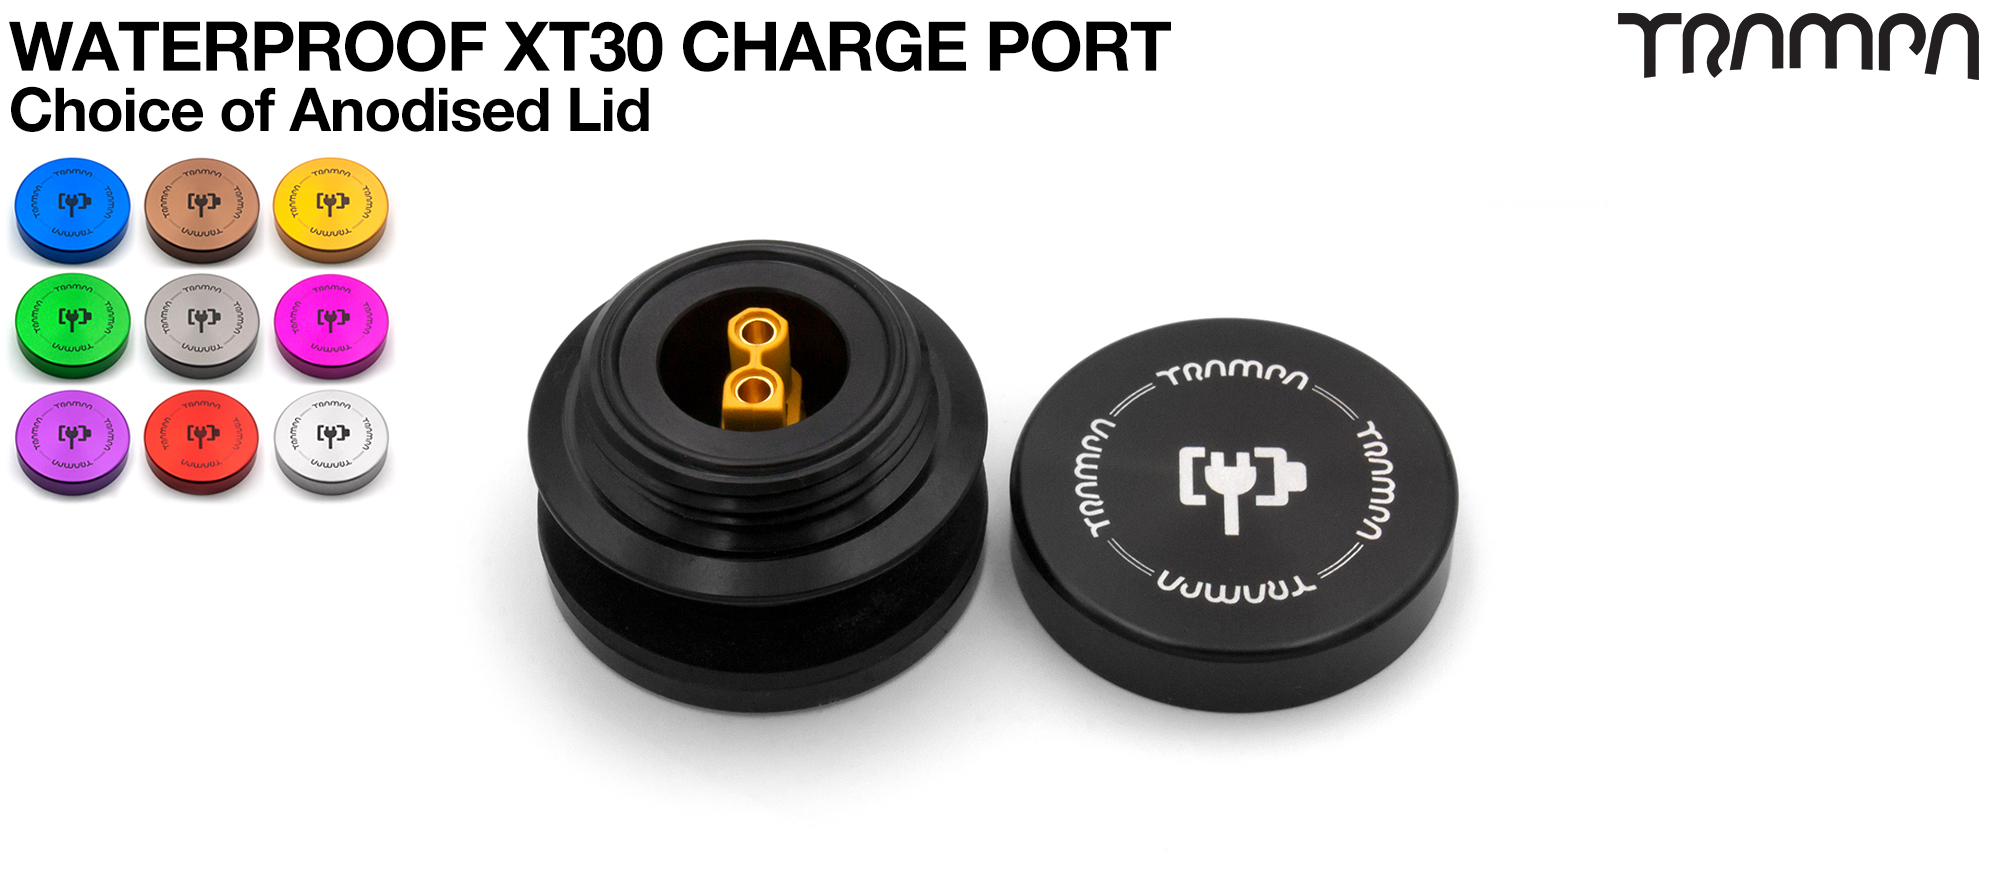 ORRSOM GT XT30 WATERPROOF Charge Port